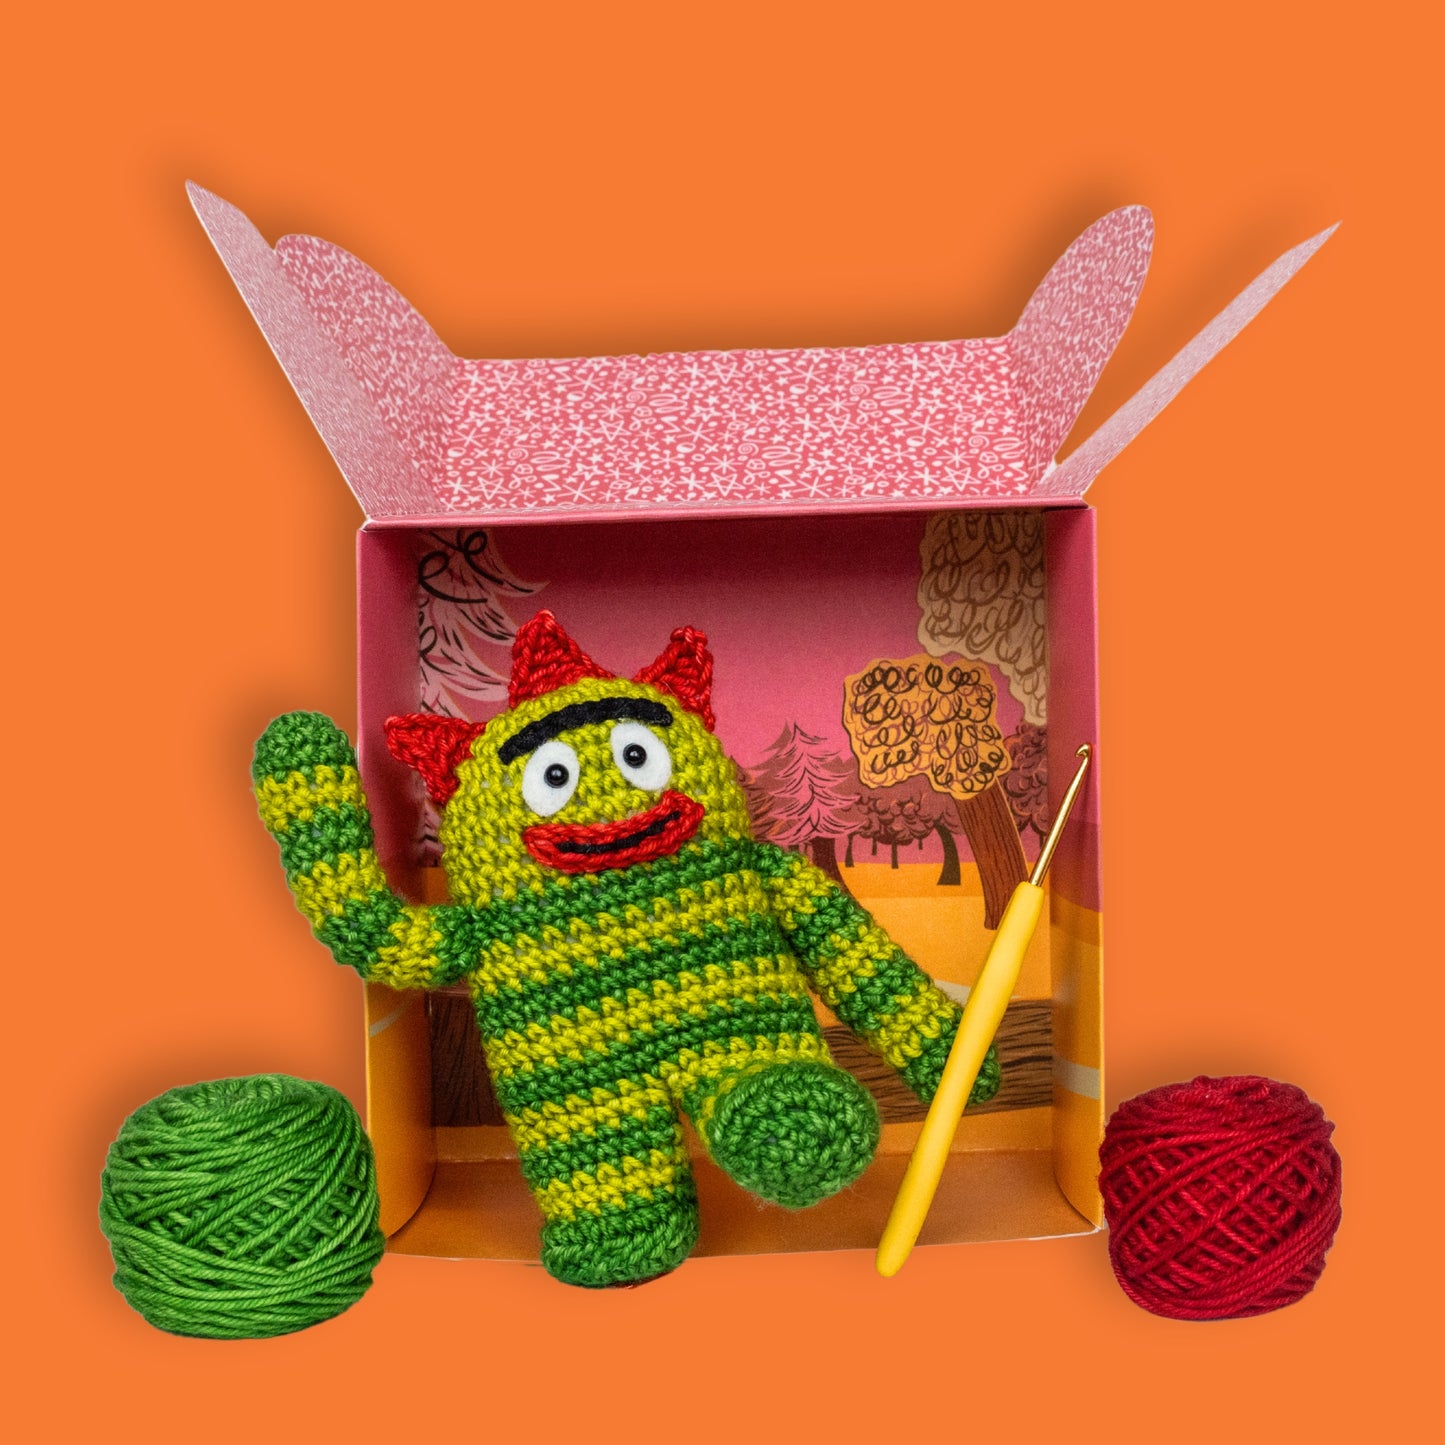 Yo Gabba Gabba! AmiguruME Brobee Crochet Kit with Crafty Is Cool! PRE-ORDER!